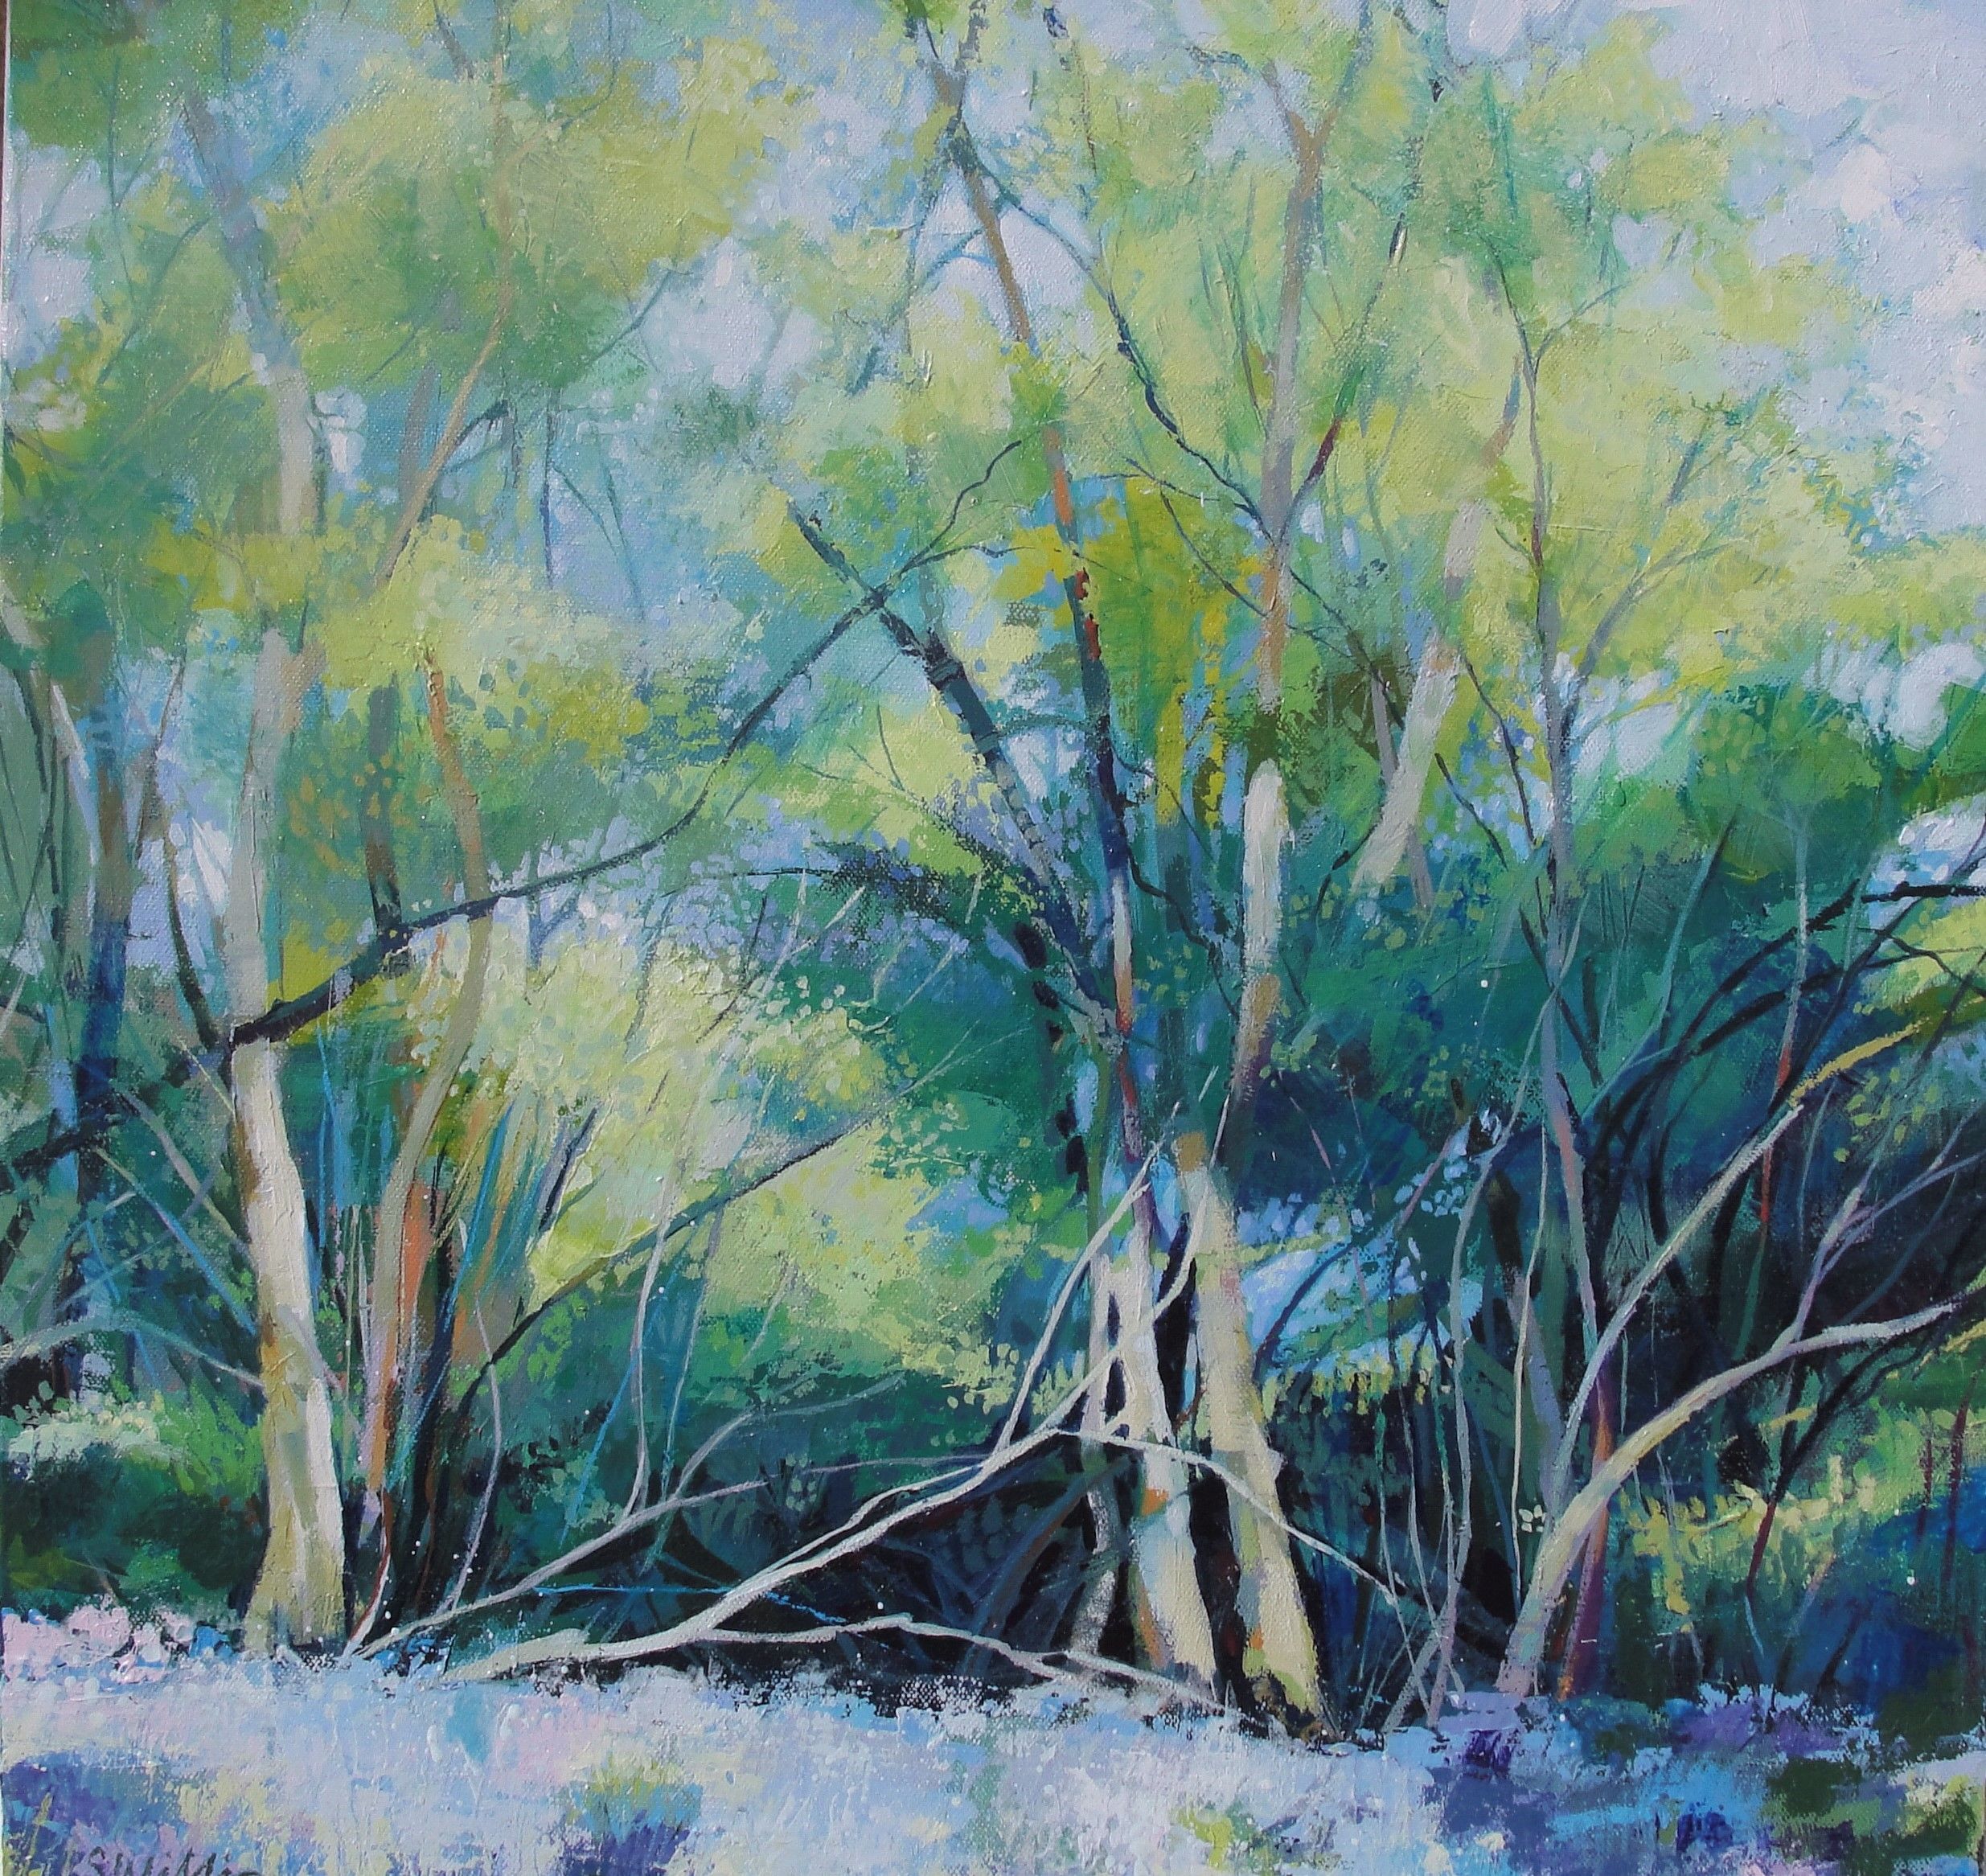 Bruern Woods Bluebells by Sharon Williams